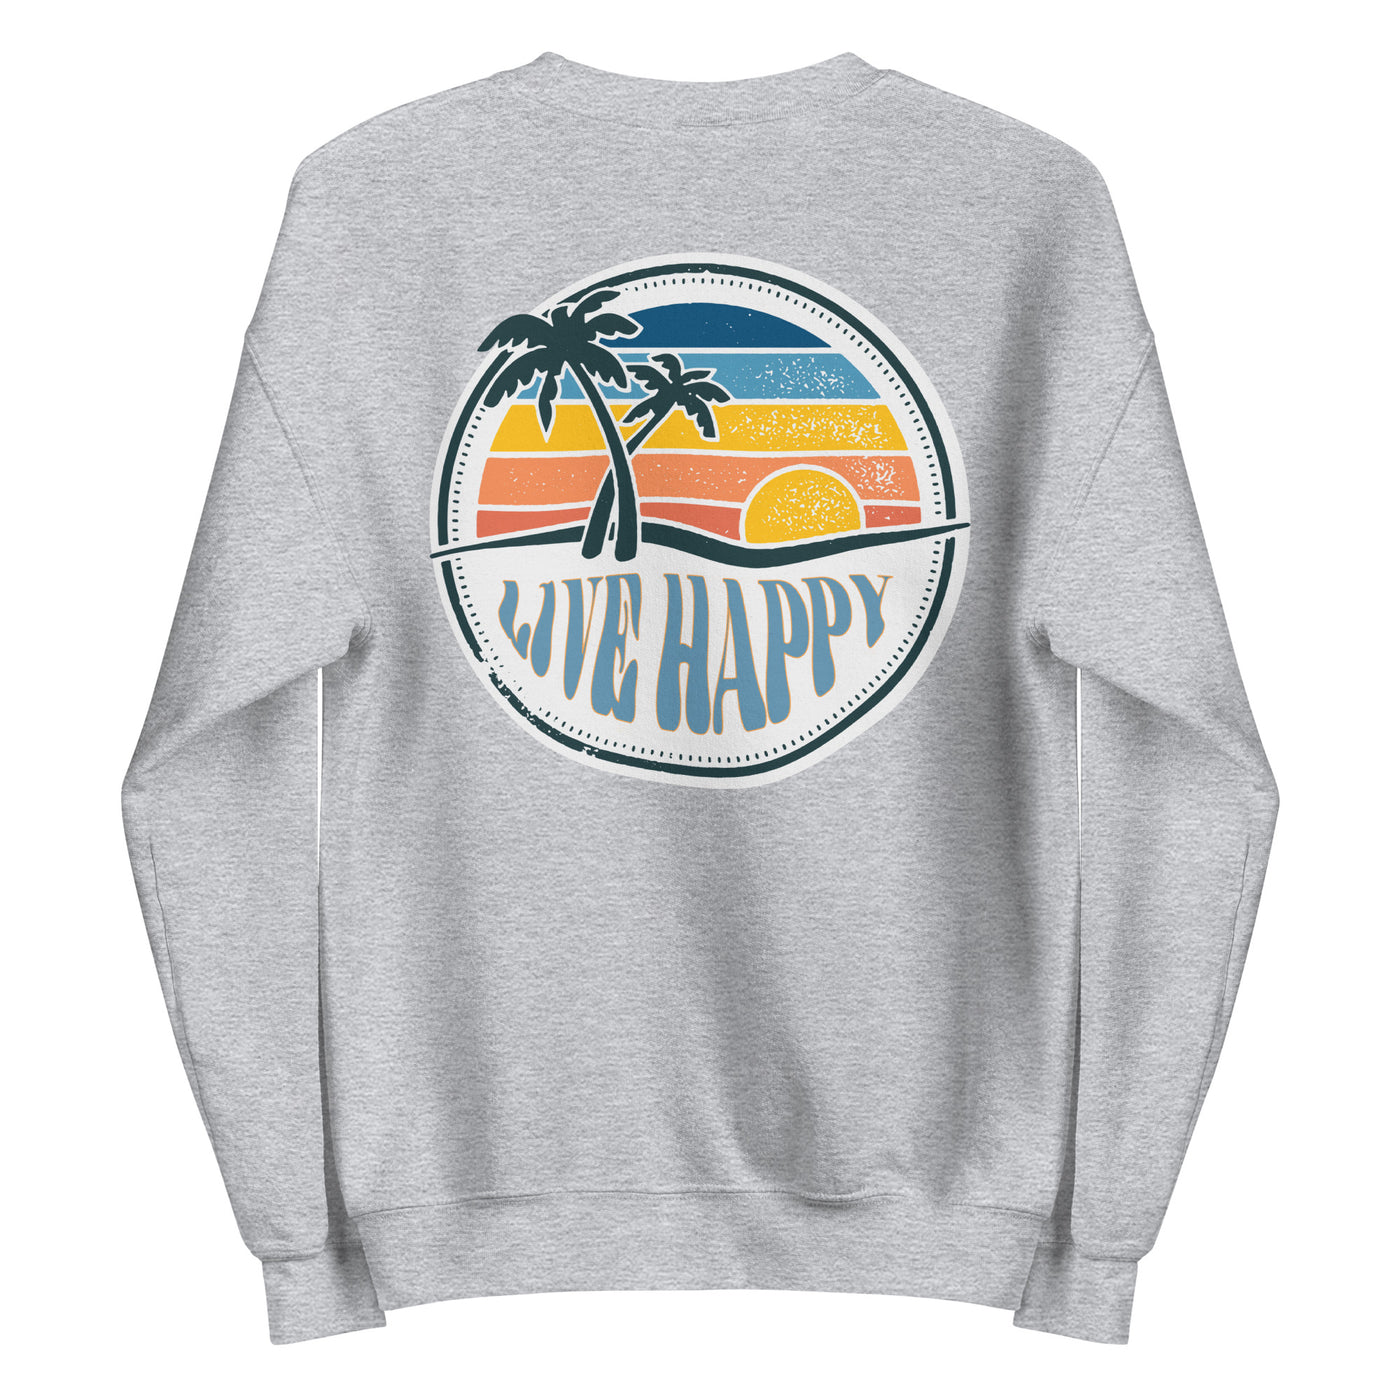 Live Happy Sunset Crewneck Sweatshirt